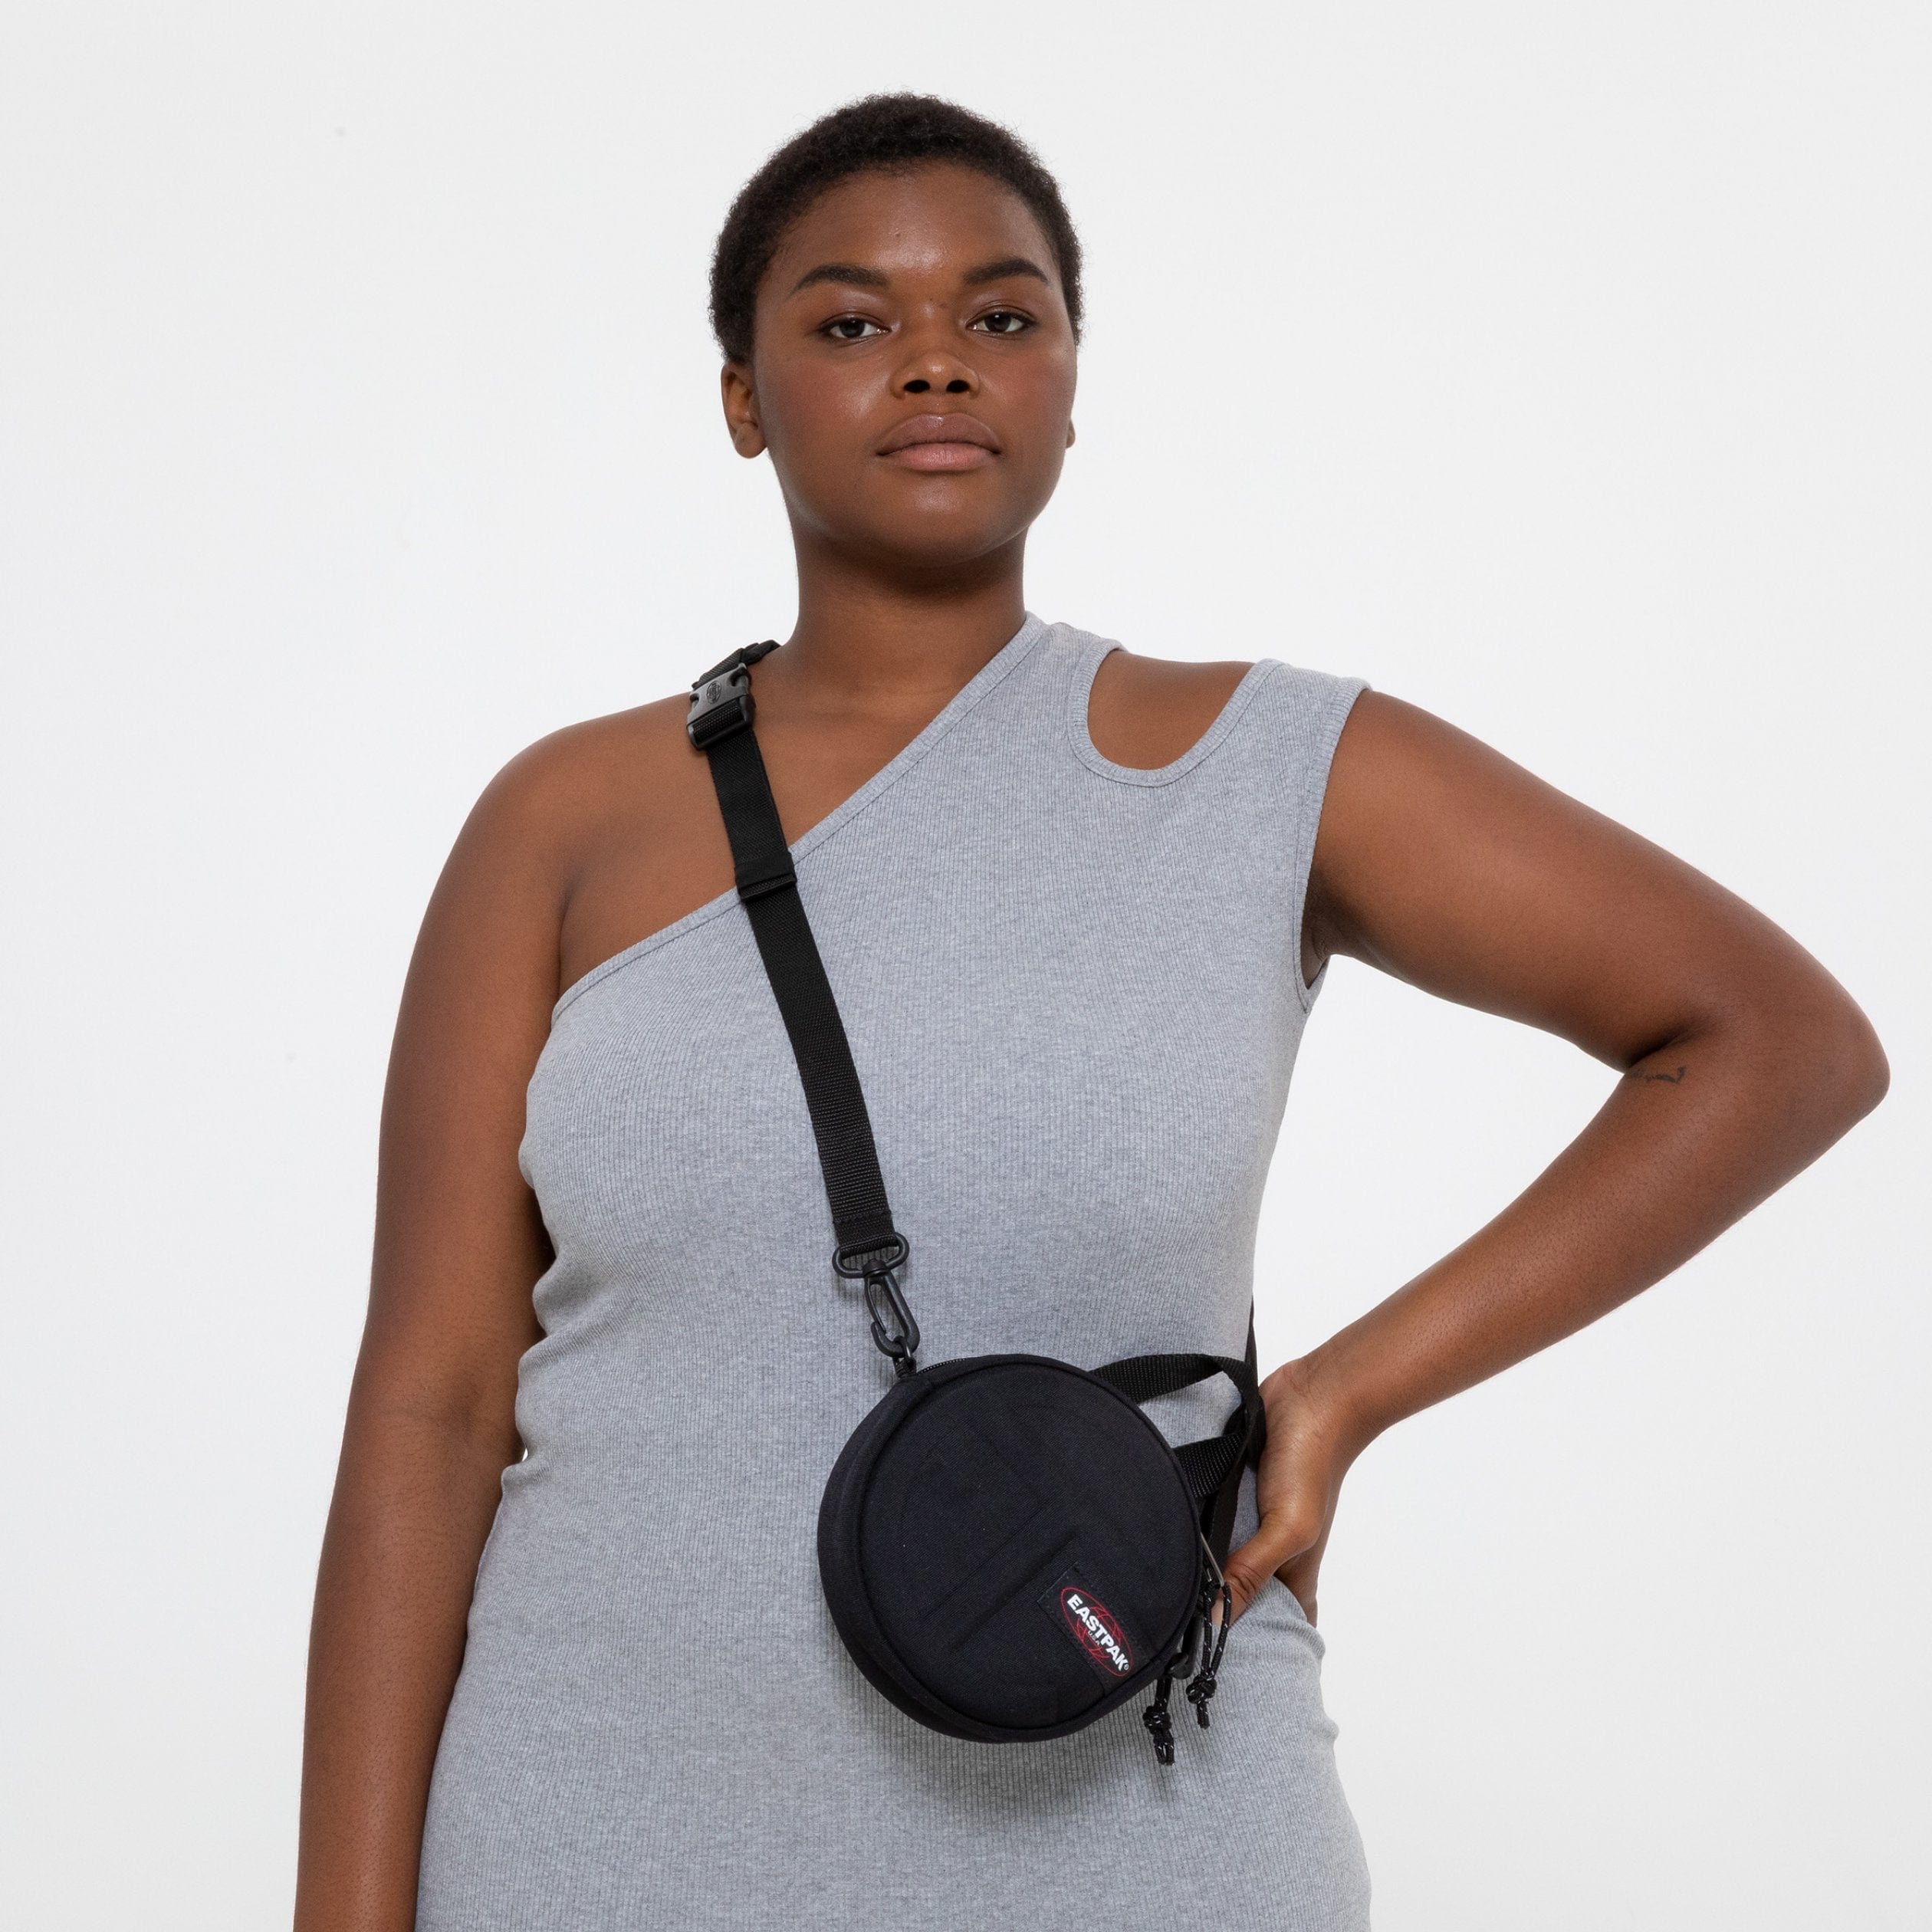 Eastpak x Telfar | Women Telfar Circle Nylon Shoulder Bag Black Unique